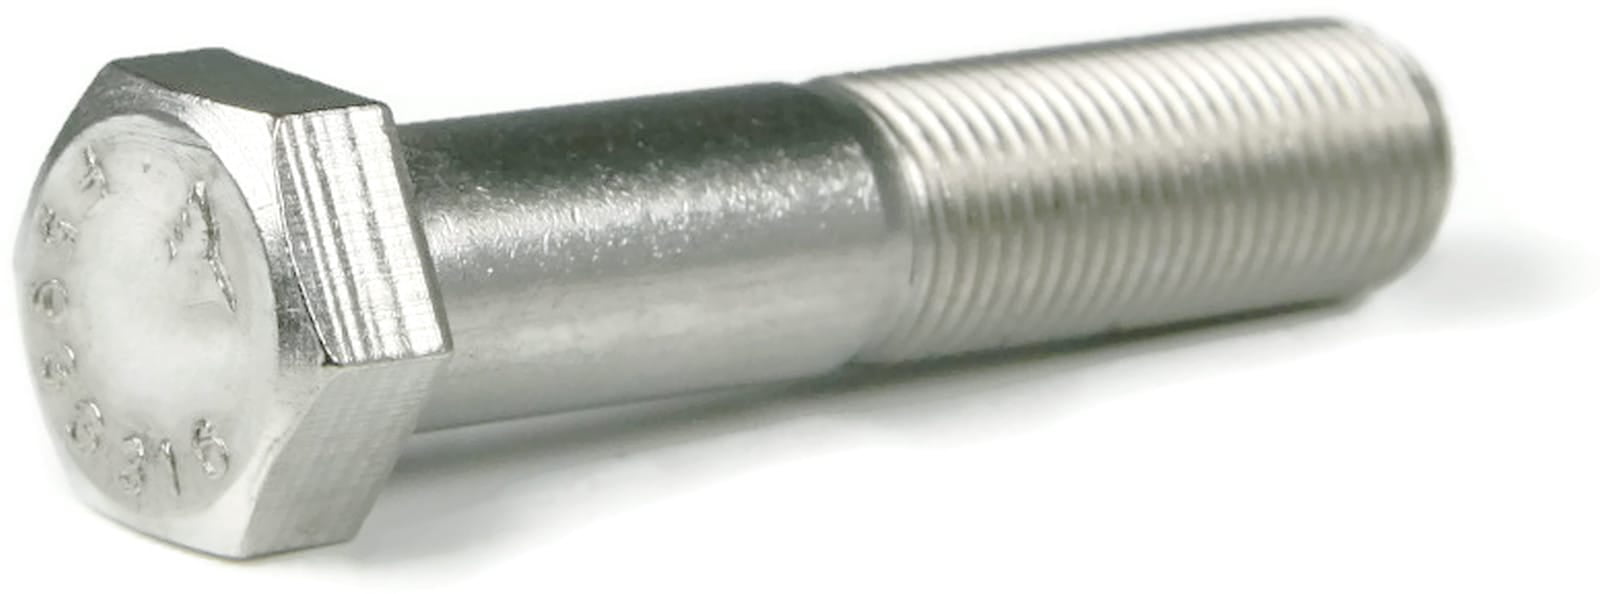 1/2-13 x Hex Cap Screws, 316 Stainless Steel (Quantity: 90) Coarse Thread  (UNC) Partially Threaded